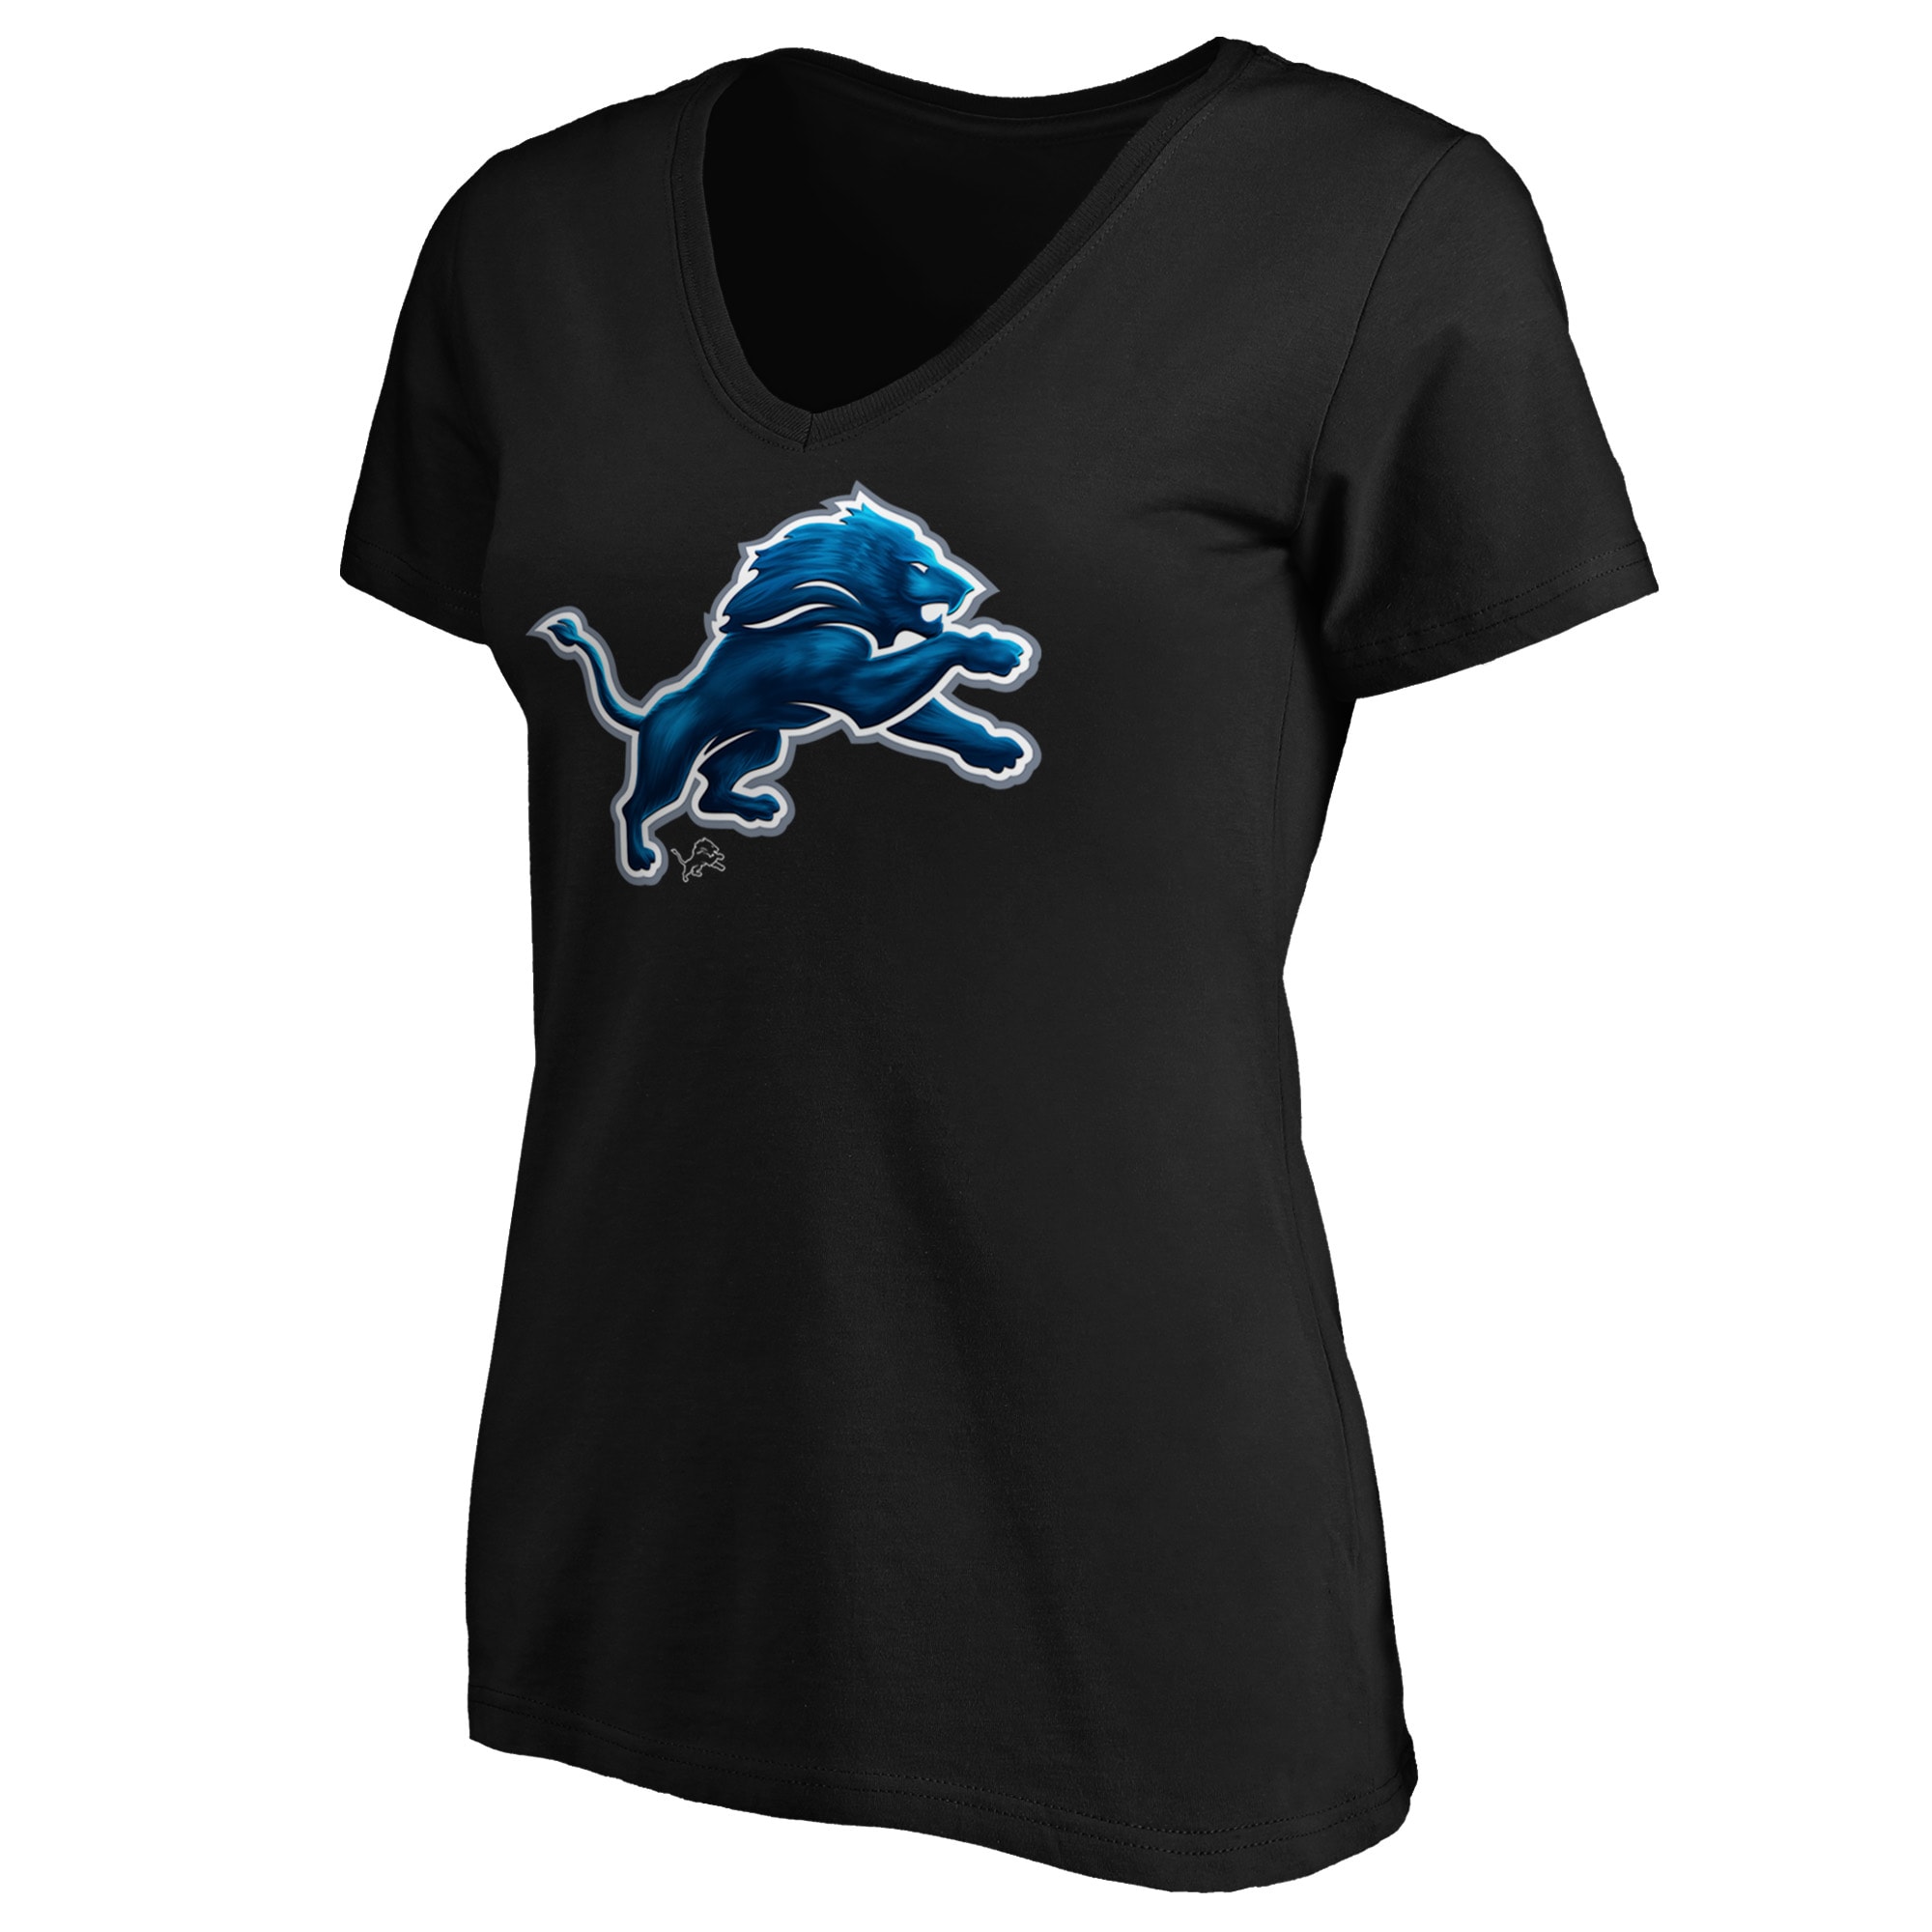 Women's Fanatics Branded Black Detroit Lions Midnight Mascot Logo V-Neck T-Shirt - image 2 of 3